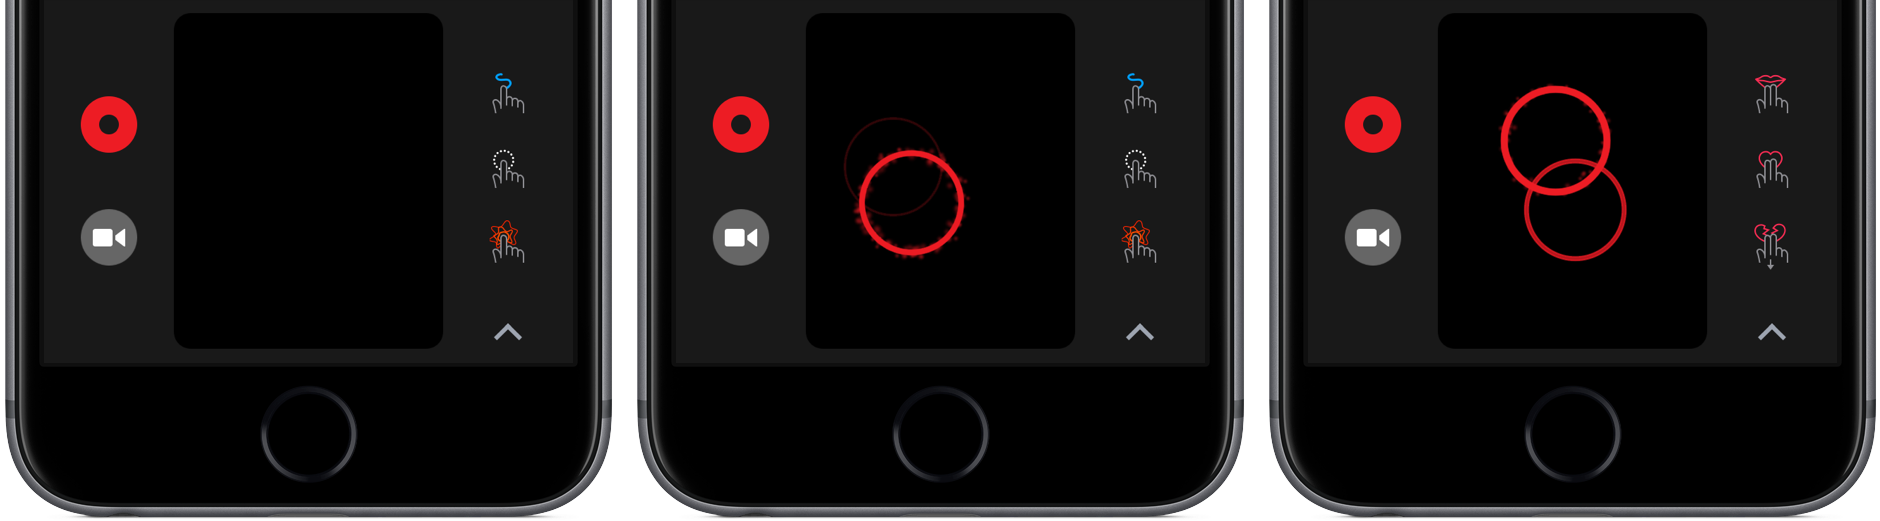 iOS 10 Digital Touch tap iPhone screenshot 002